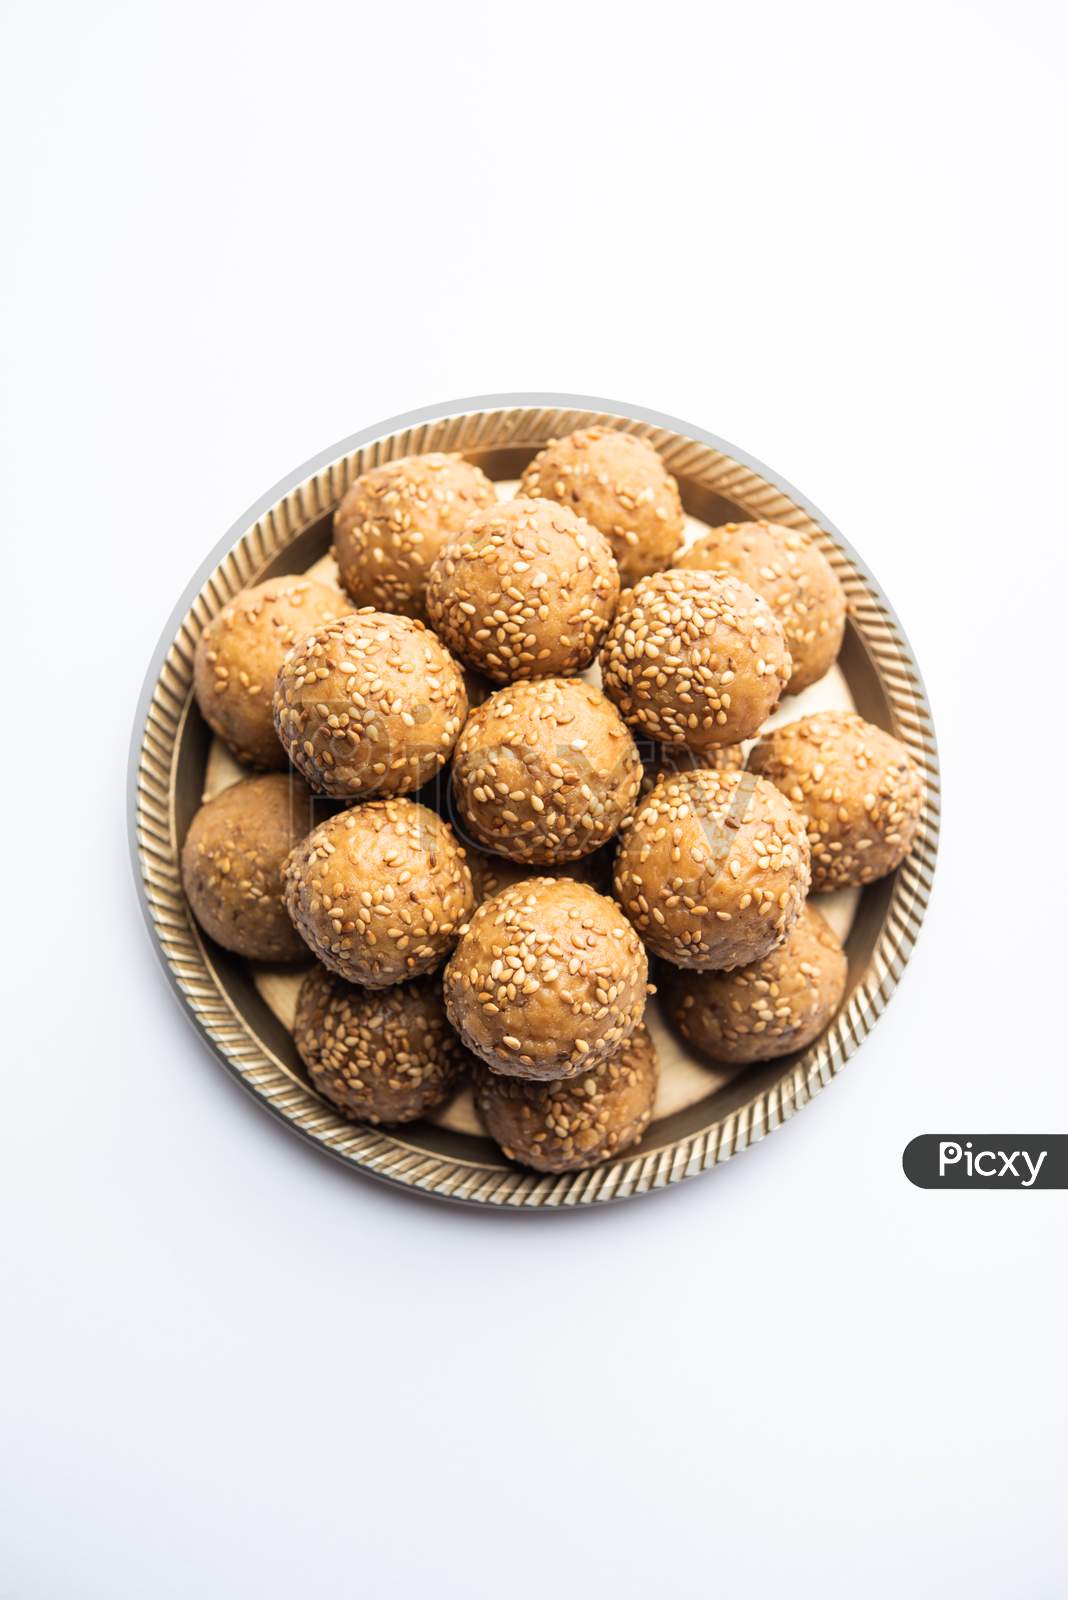 Til Gul Laddoo Or Sweet Sesame Laddu Or Balls For Indian Makar Sankranti Festival